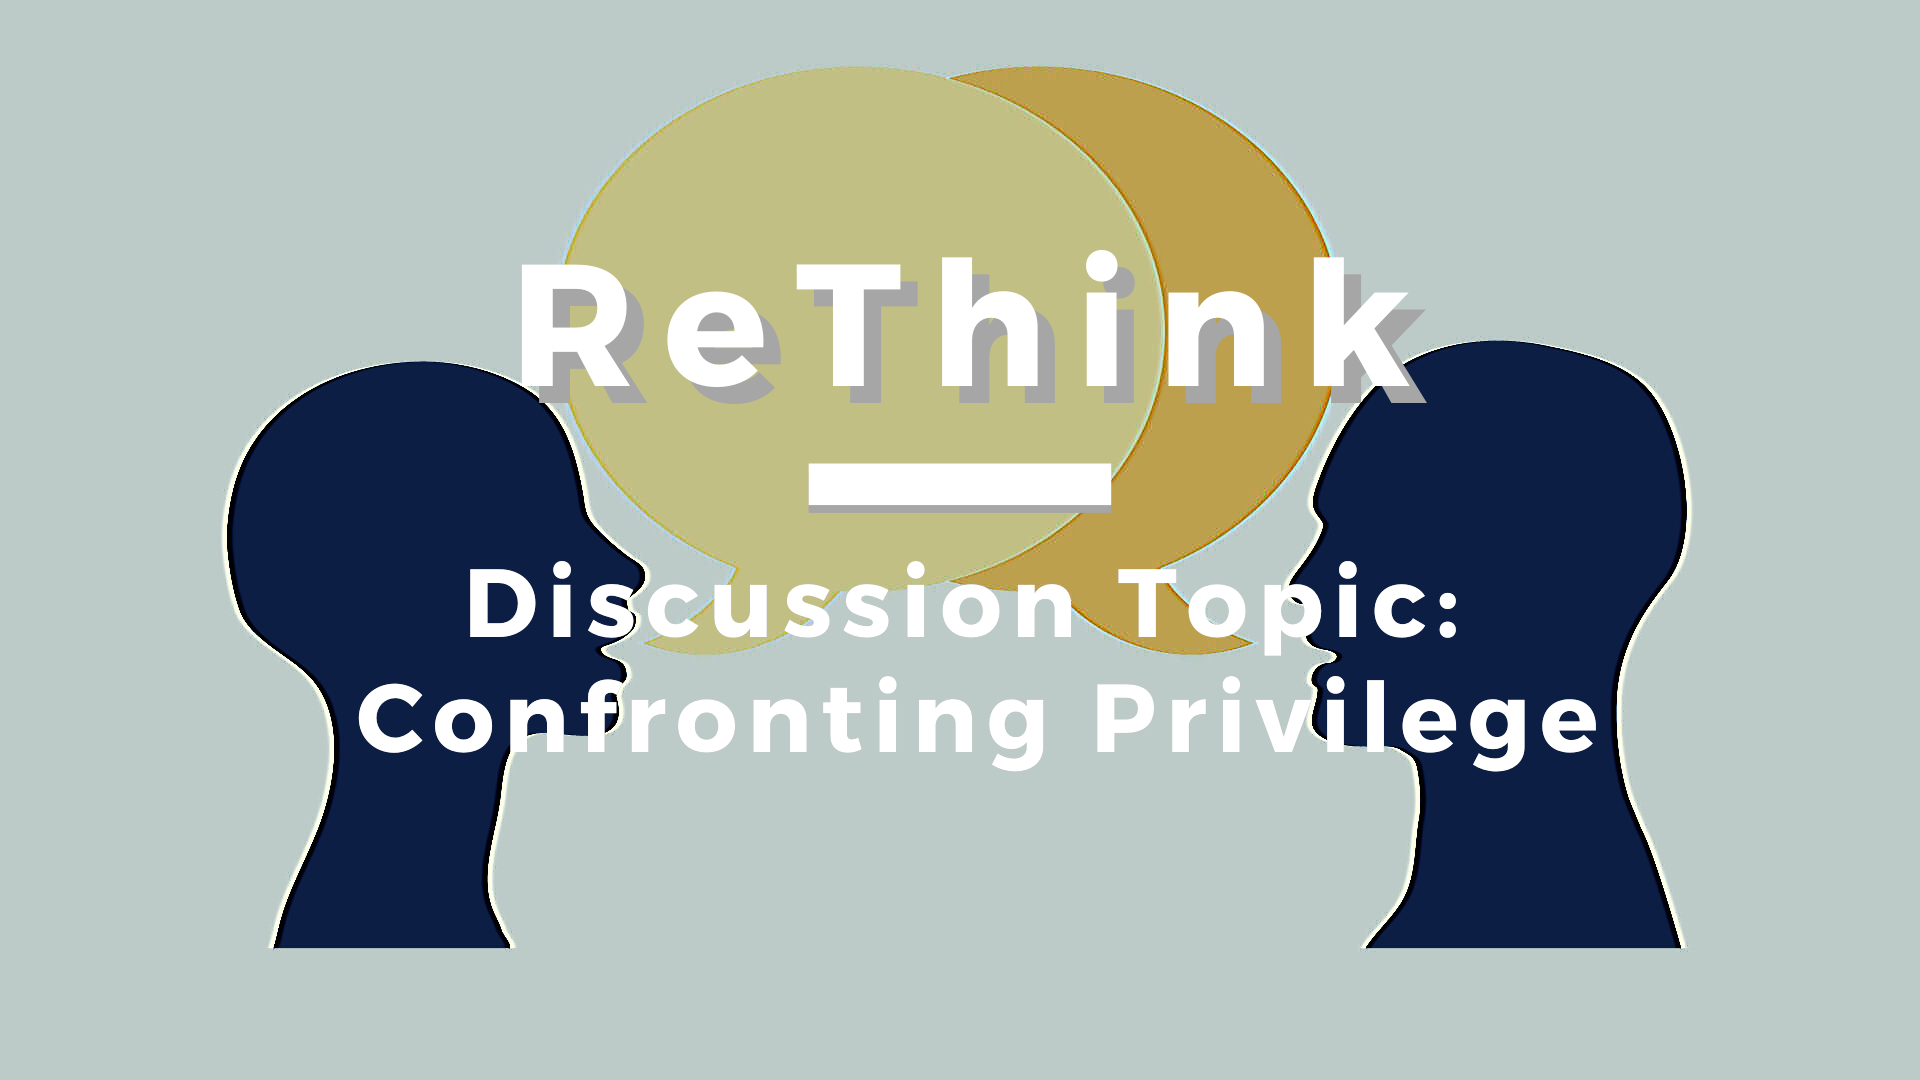 ReThink: Confronting Privilege